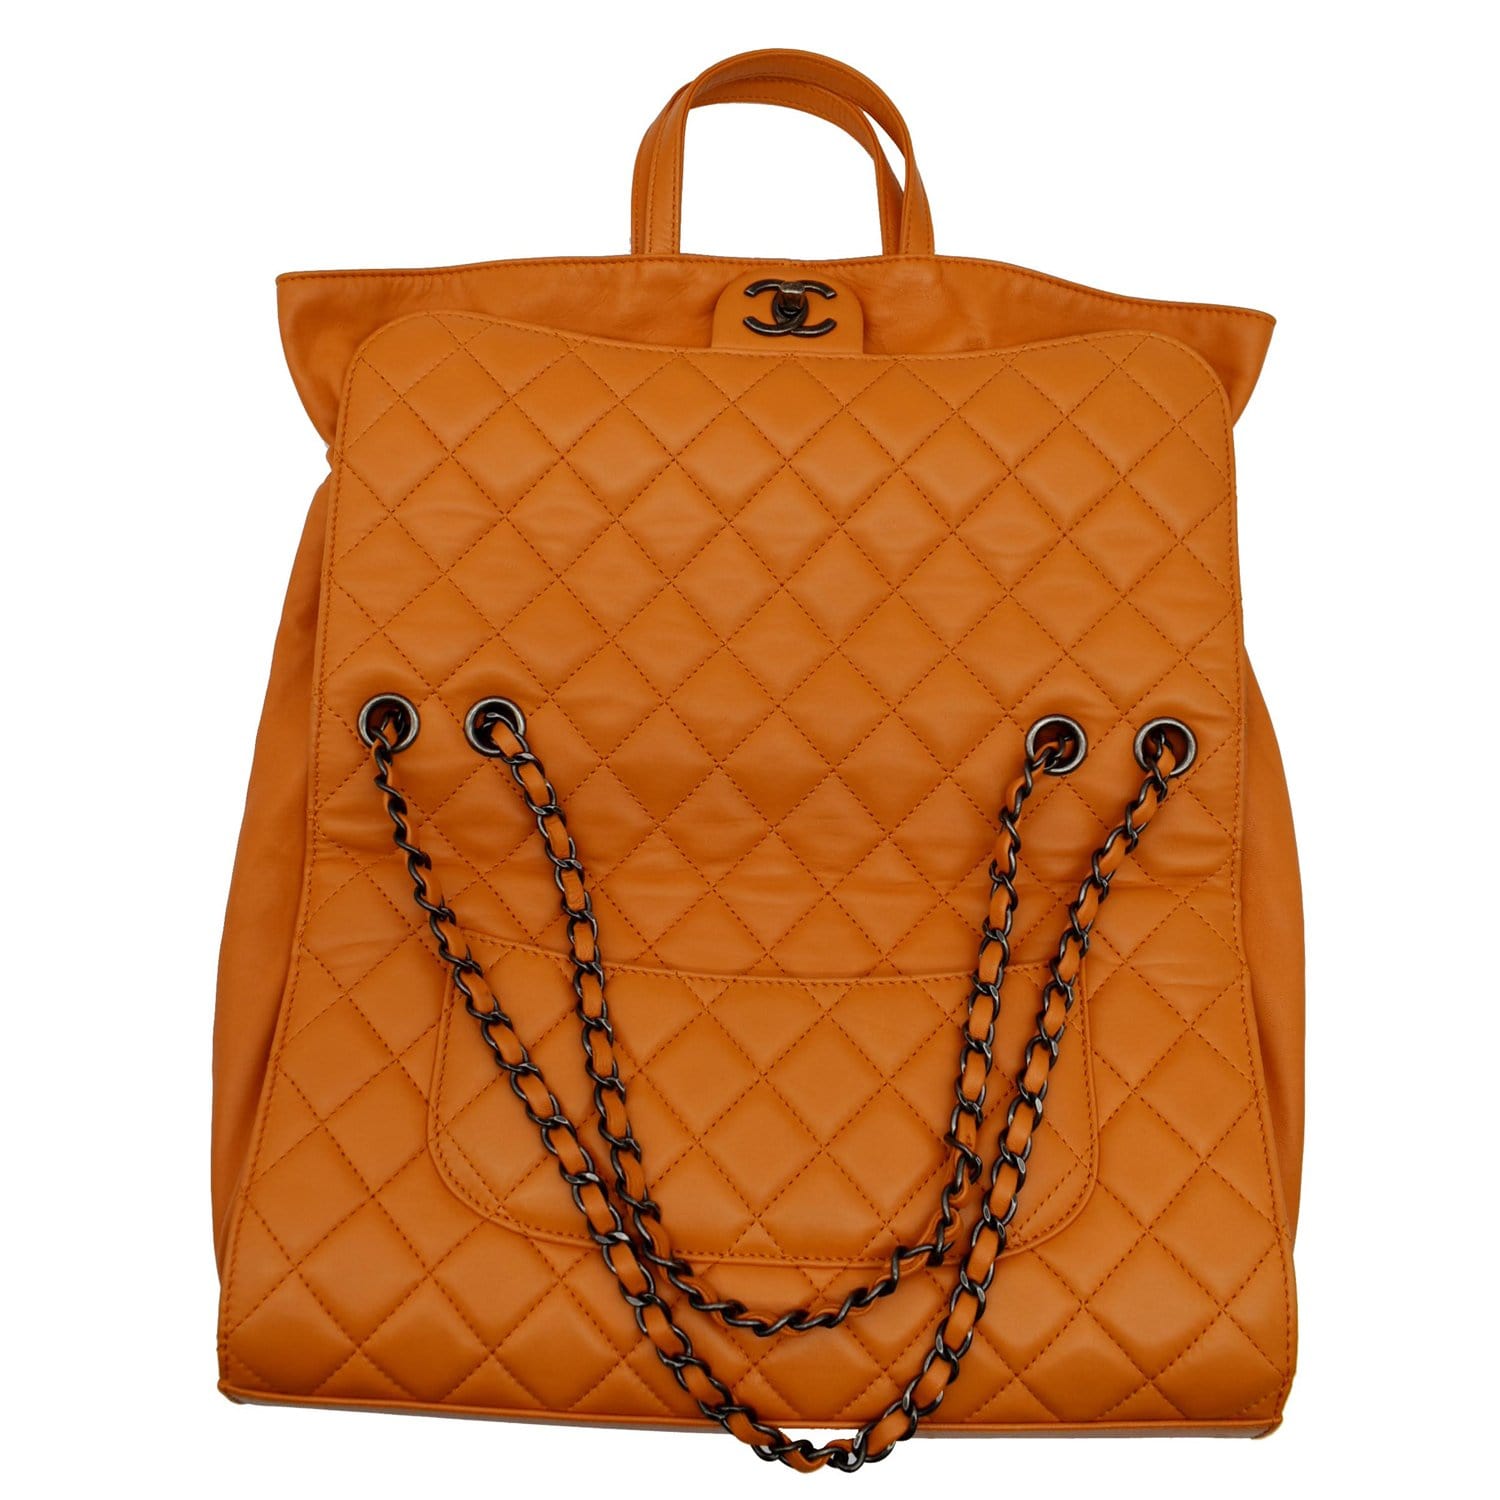 Chanel Vintage Olsen CC Chain Shoulder Bag Canvas and Leather Medium Orange